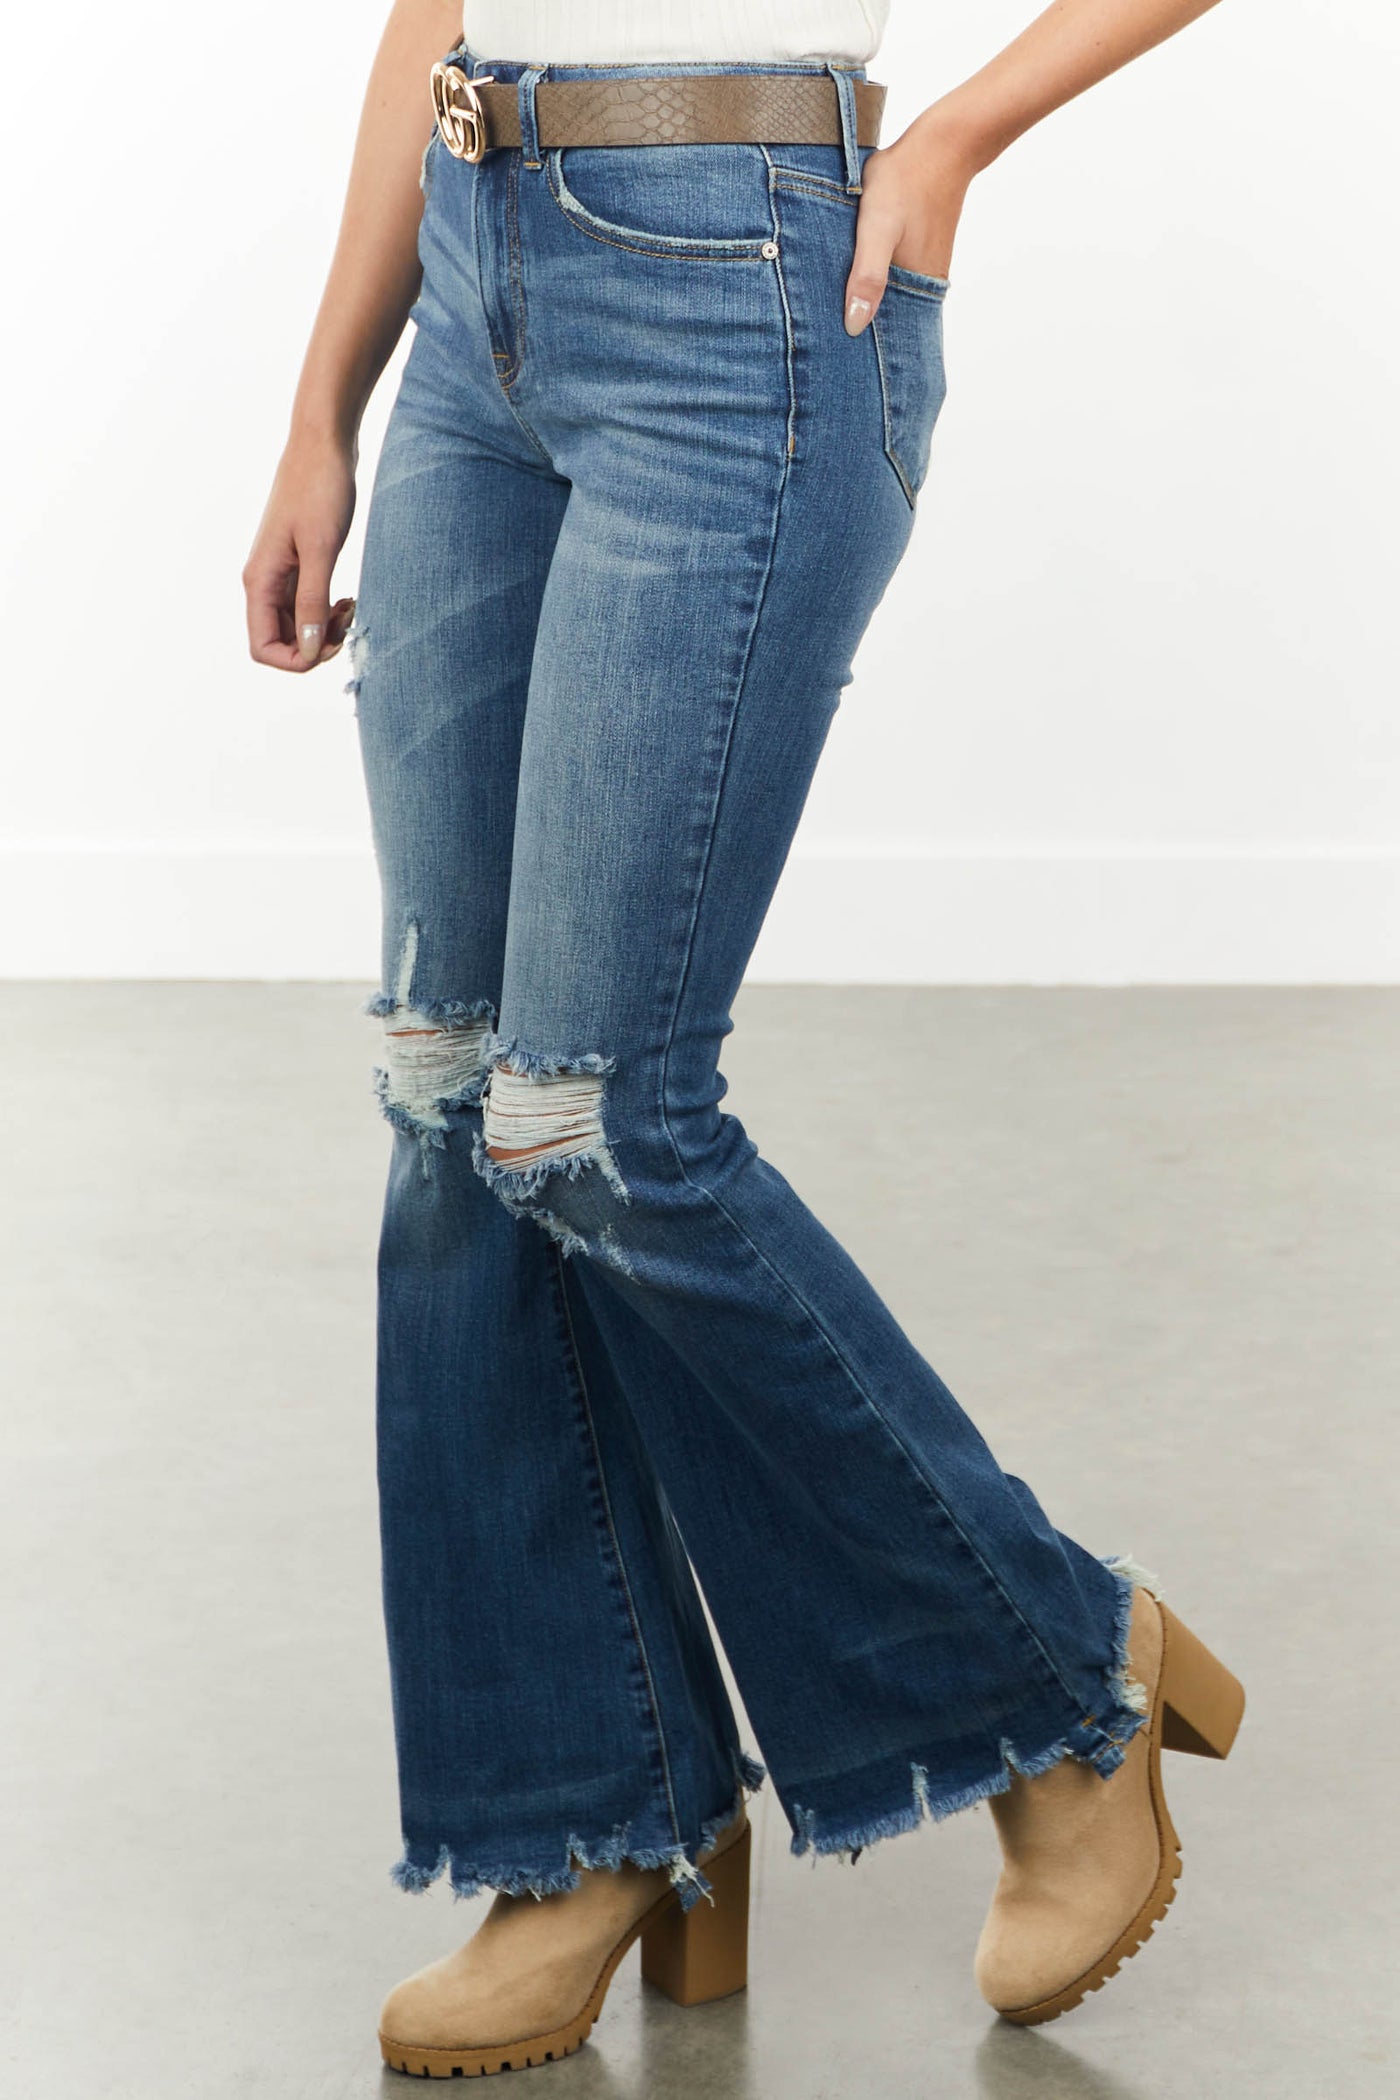 Medium High Rise Flare Cut Distressed Jeans